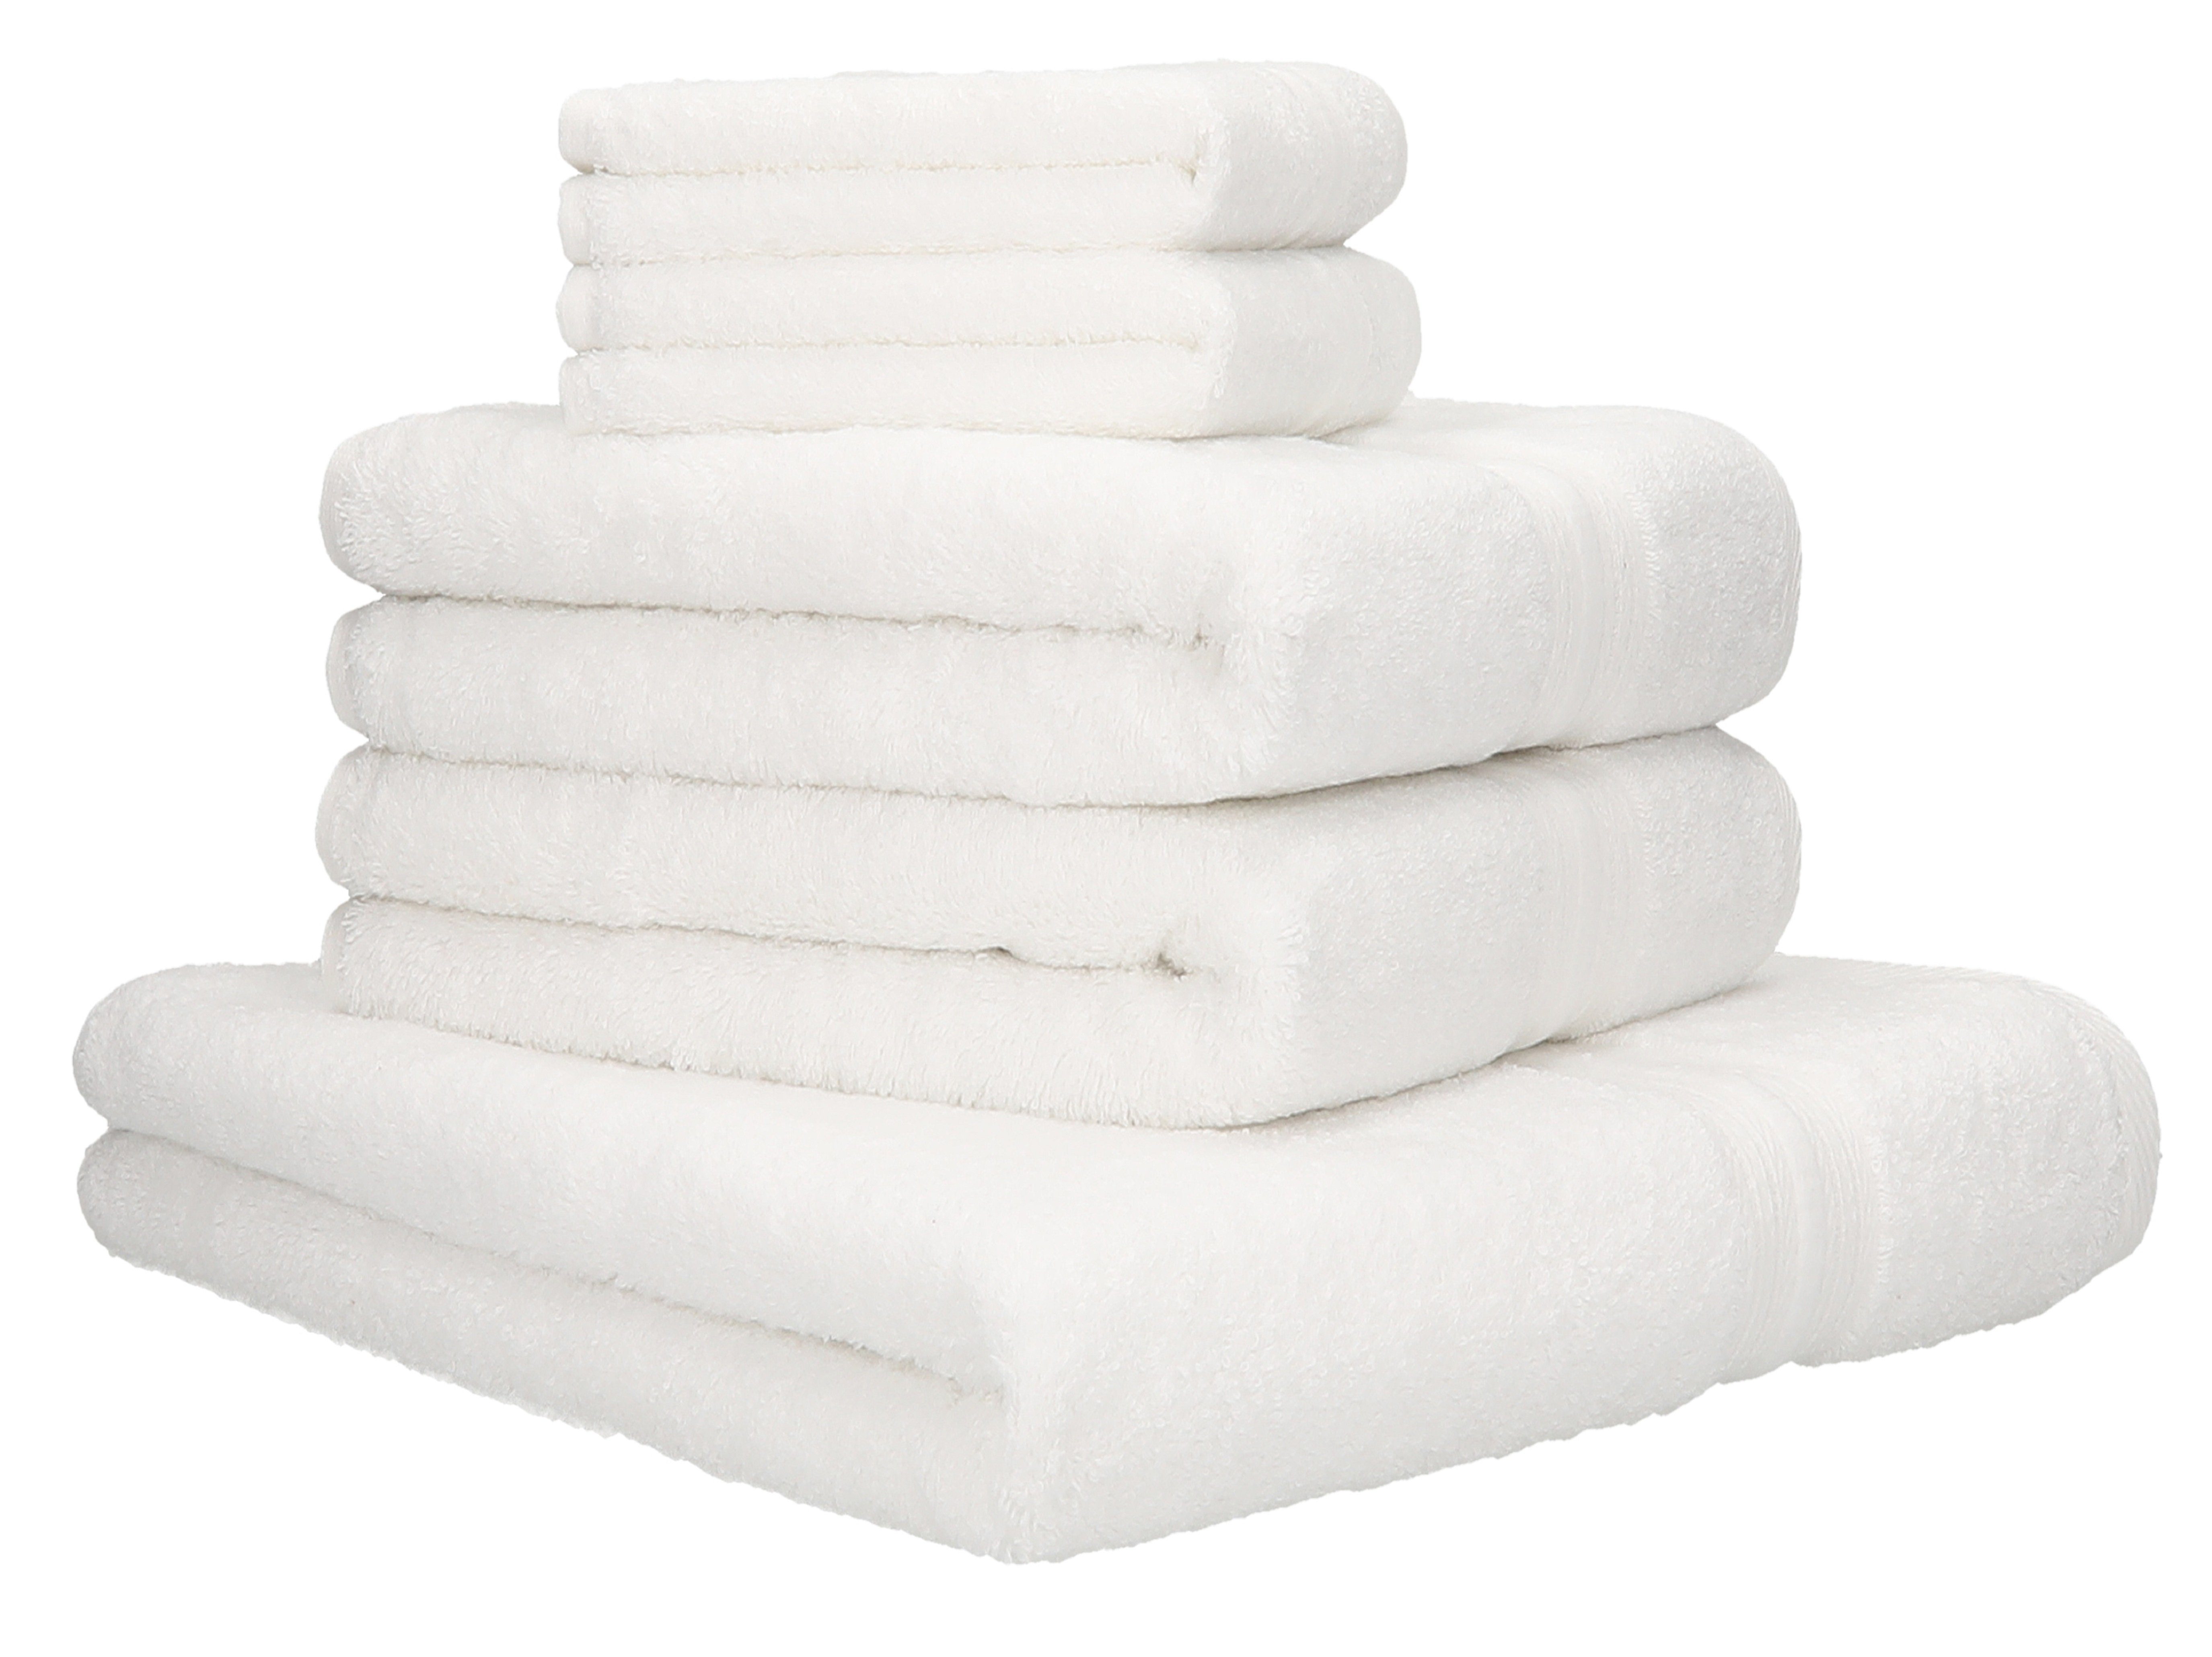 Betz Handtuch Set 5-TLG. Handtuch-Set GOLD 100% Baumwolle Qualität 600 g/m²  1 Duschtuch 2 Handtücher 2 Seiftücher Farbe weiß, 100% Baumwolle